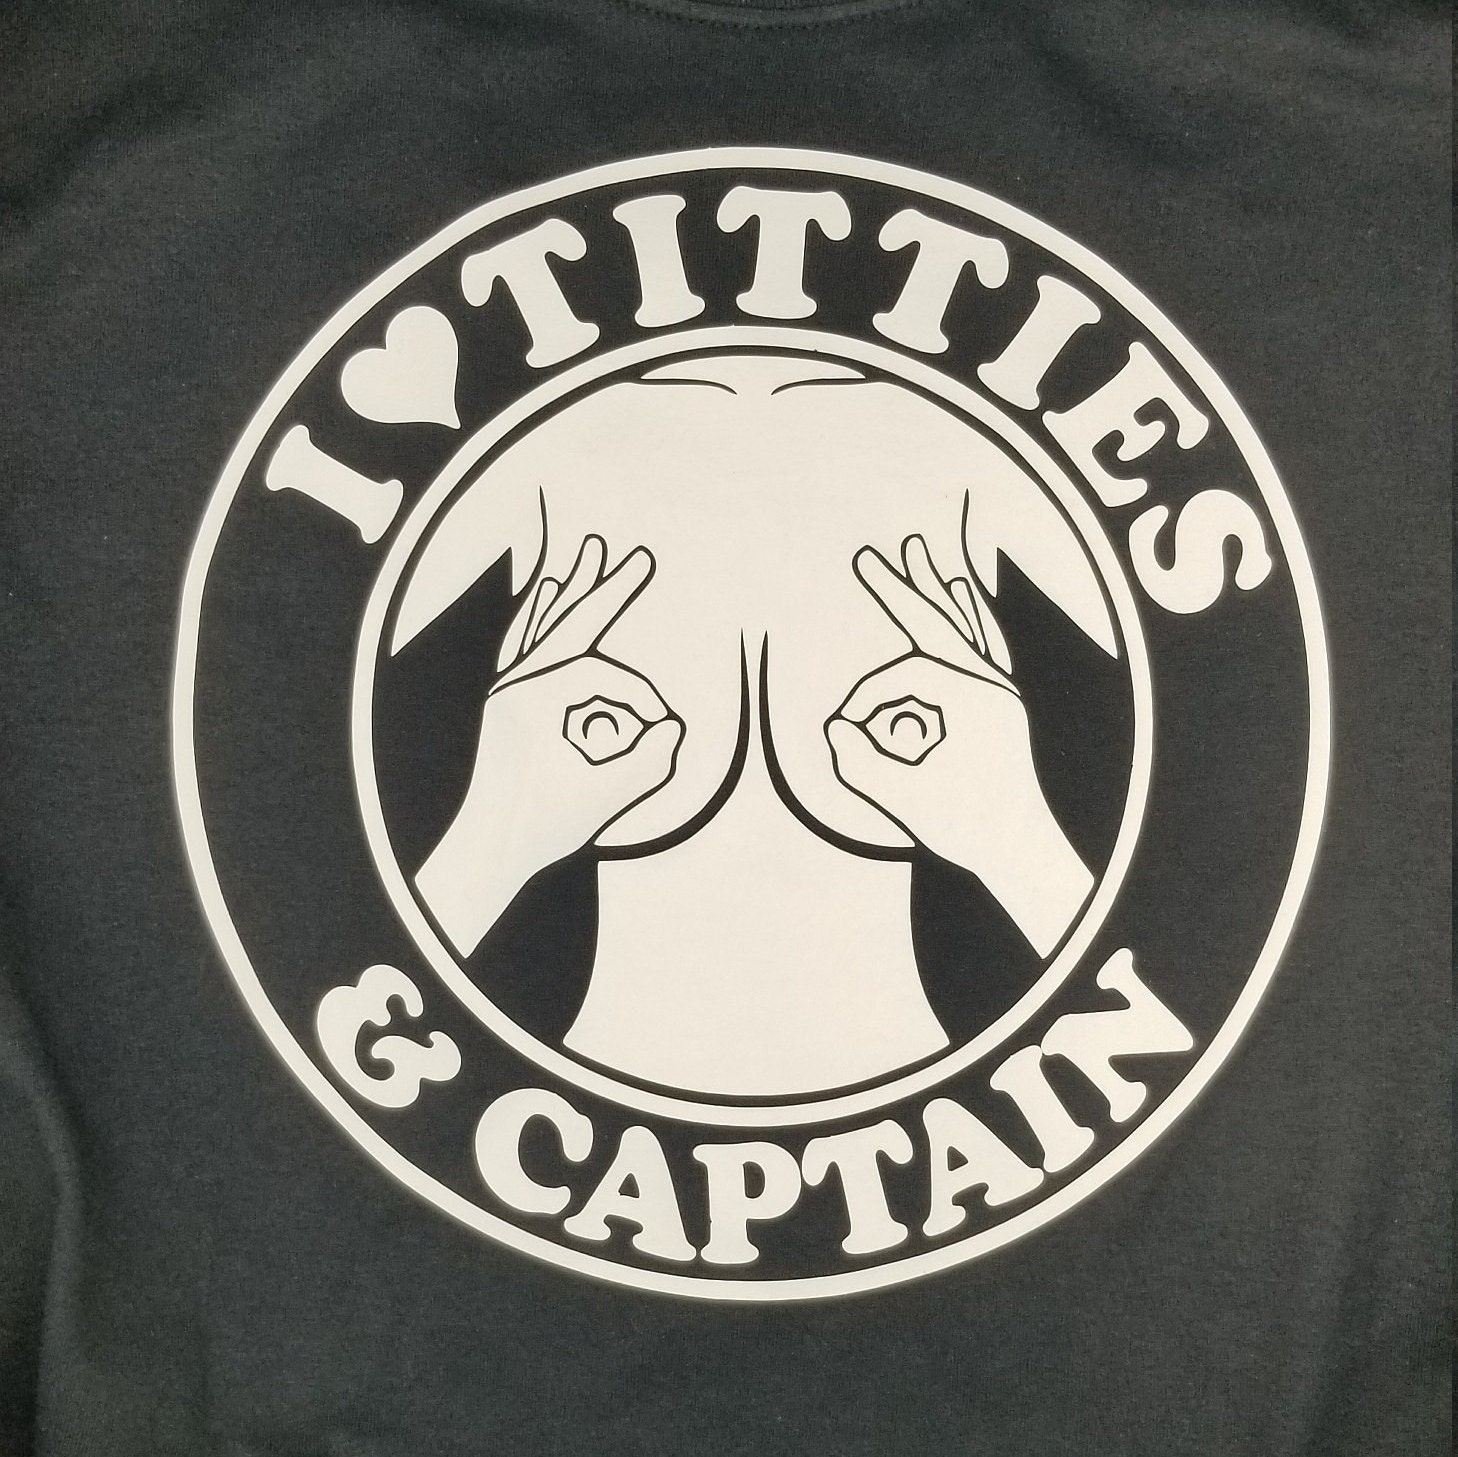 I love titties and captain t shirt.